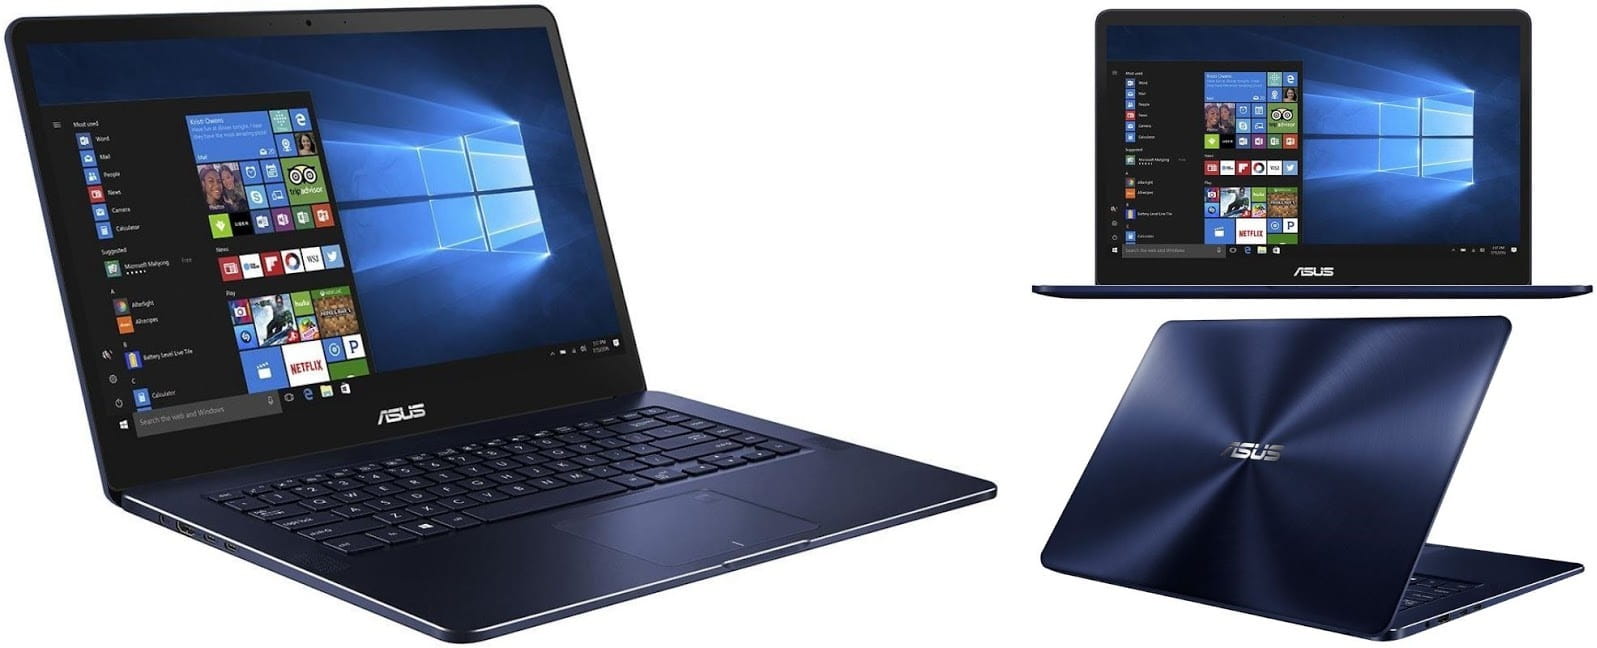 Laptop ASUS Zenbook Pro UX550VD 15.6" IPS FullHD /  i7-7700HQ / 8Gb RAM / 512Gb SSD / GeForce GTX 1050M 4Gb / Windows 10 Home / Royal